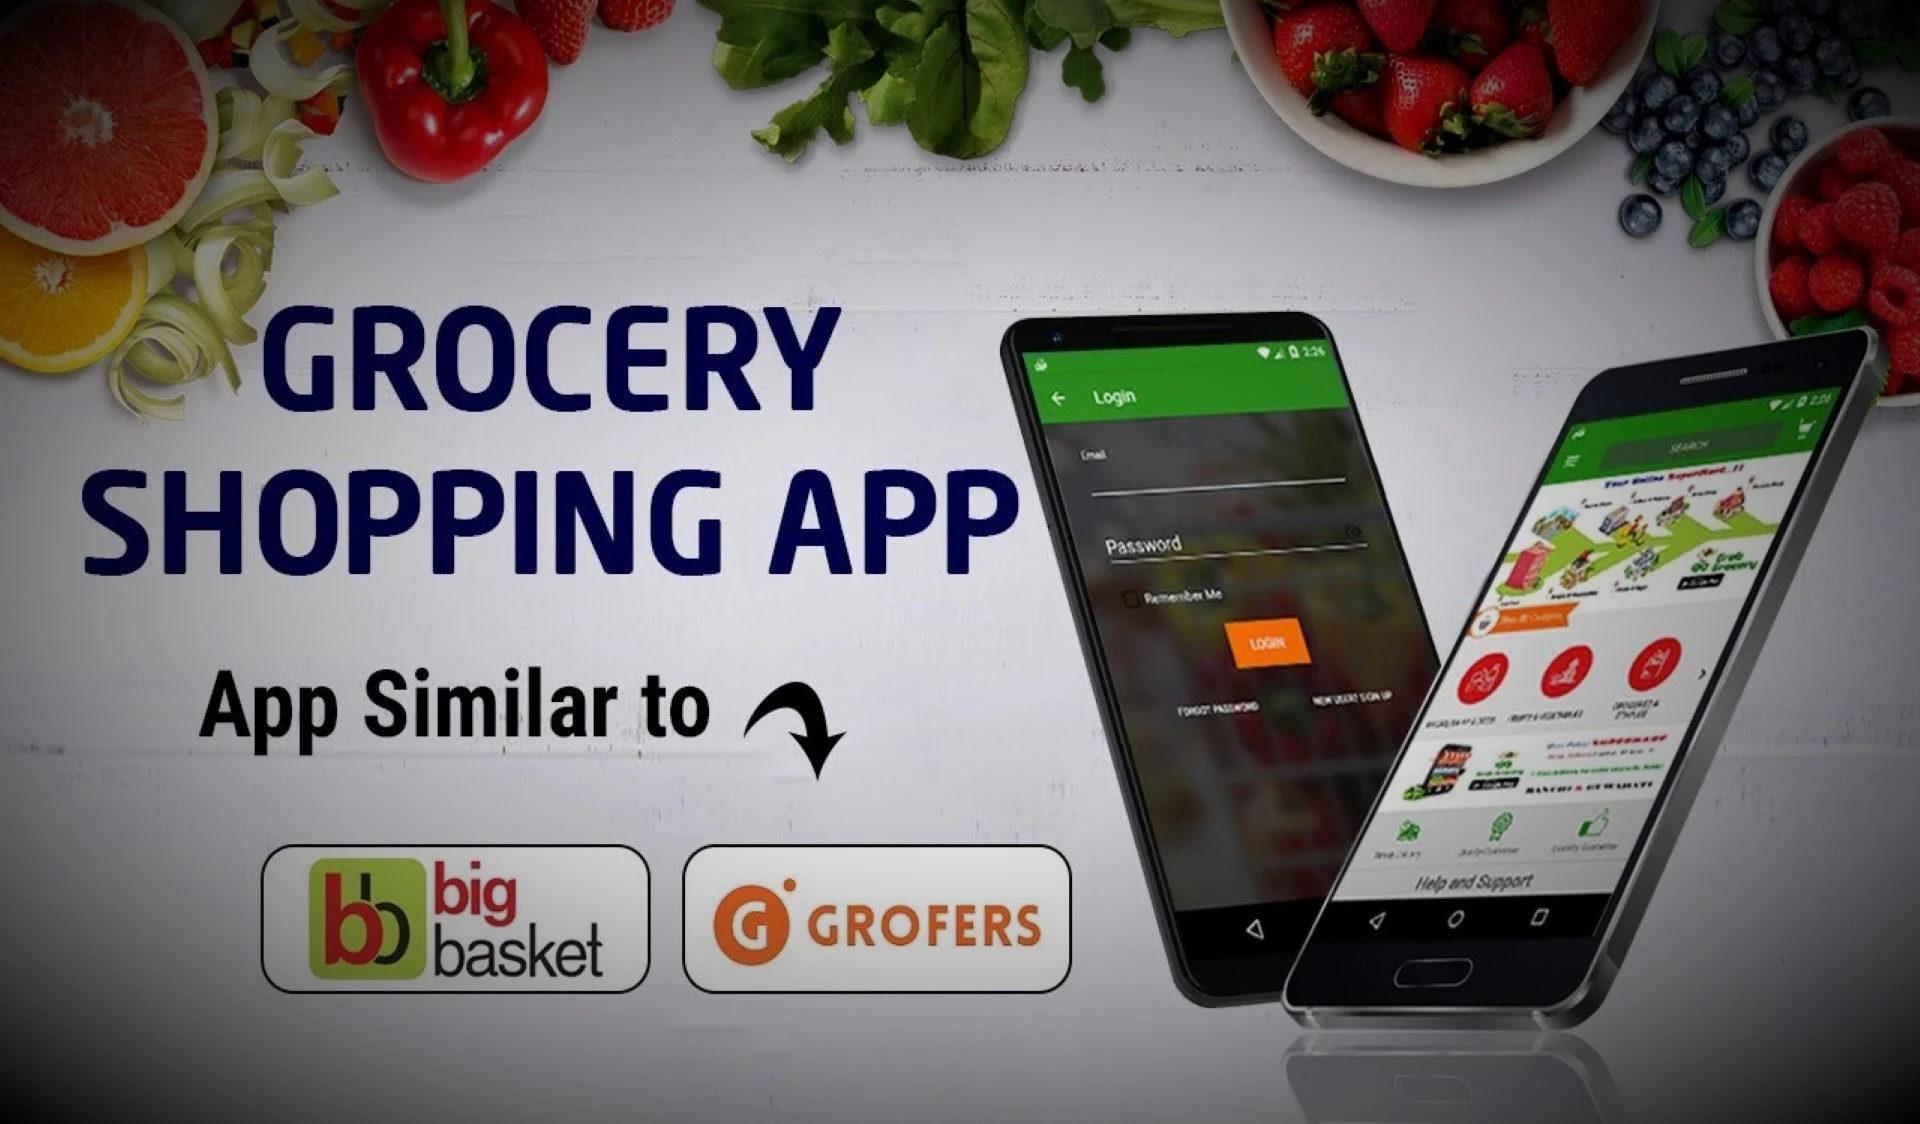 online grocery delivery app model3 like bigbasket, grofers